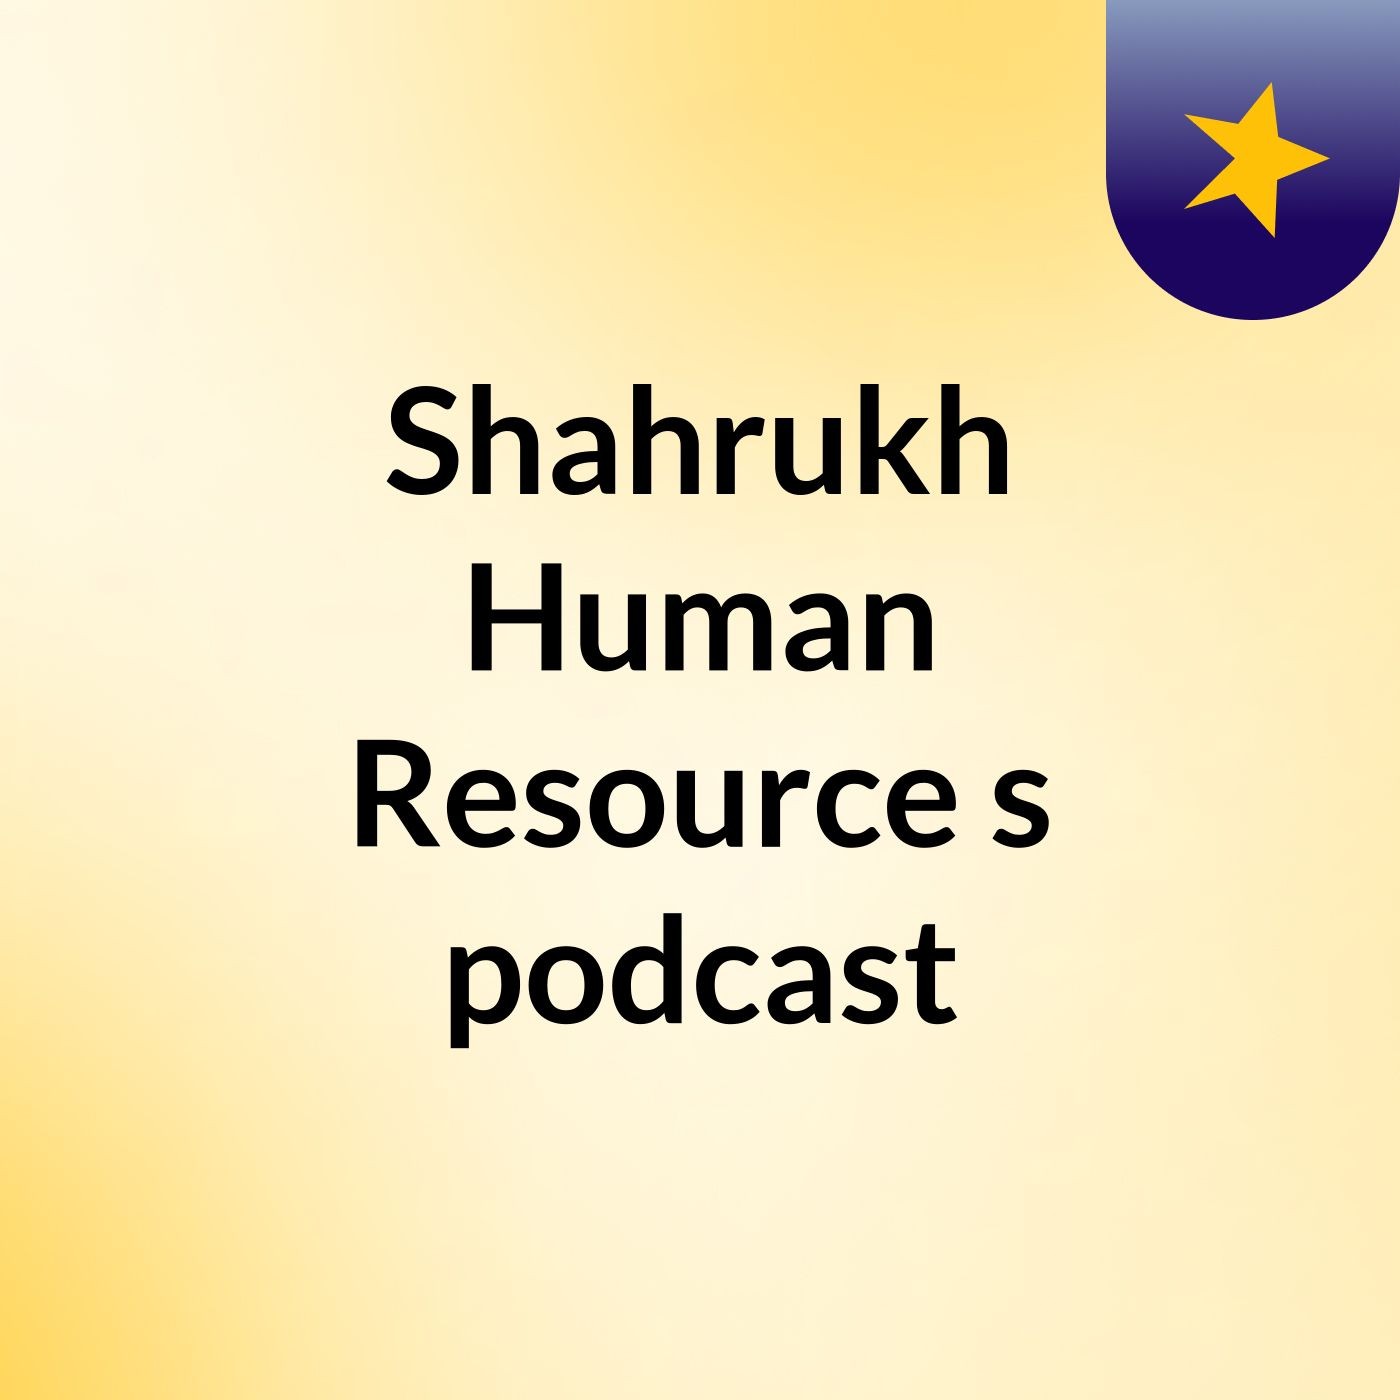 Episode 3 - Shahrukh Human Resource's podcast